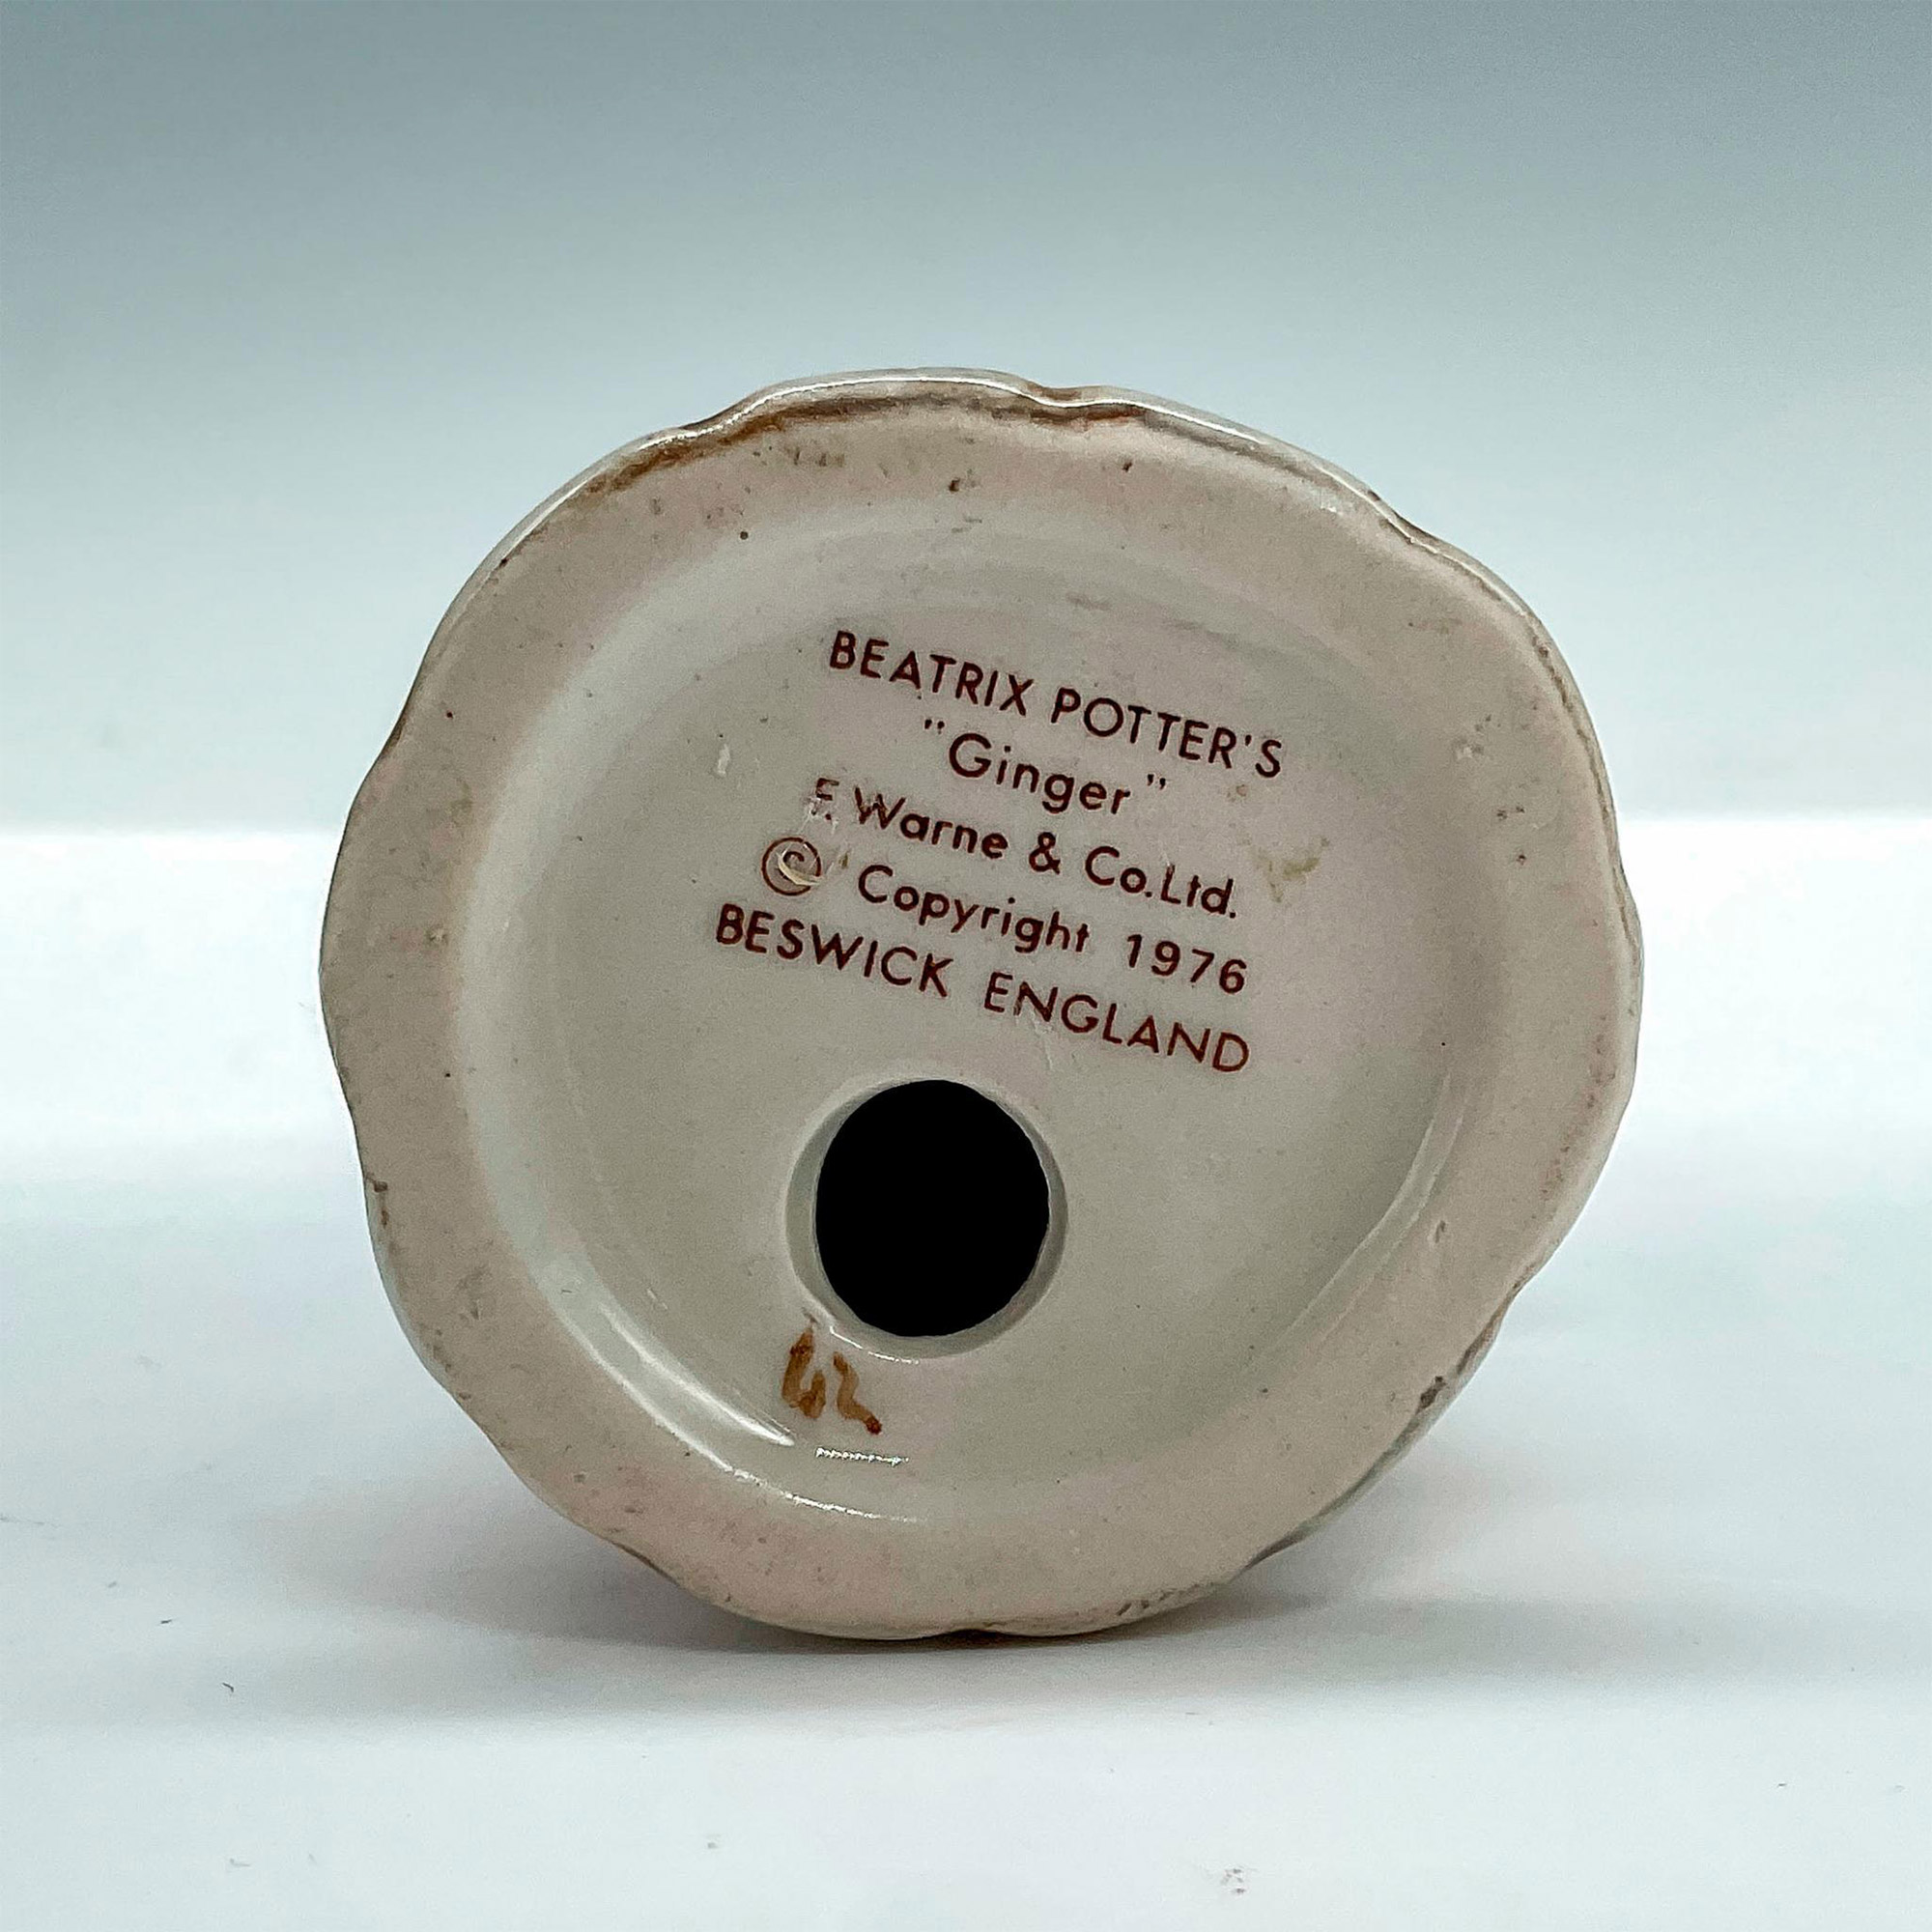 Beswick Beatrix Potter's Figurine, Ginger - Image 3 of 3